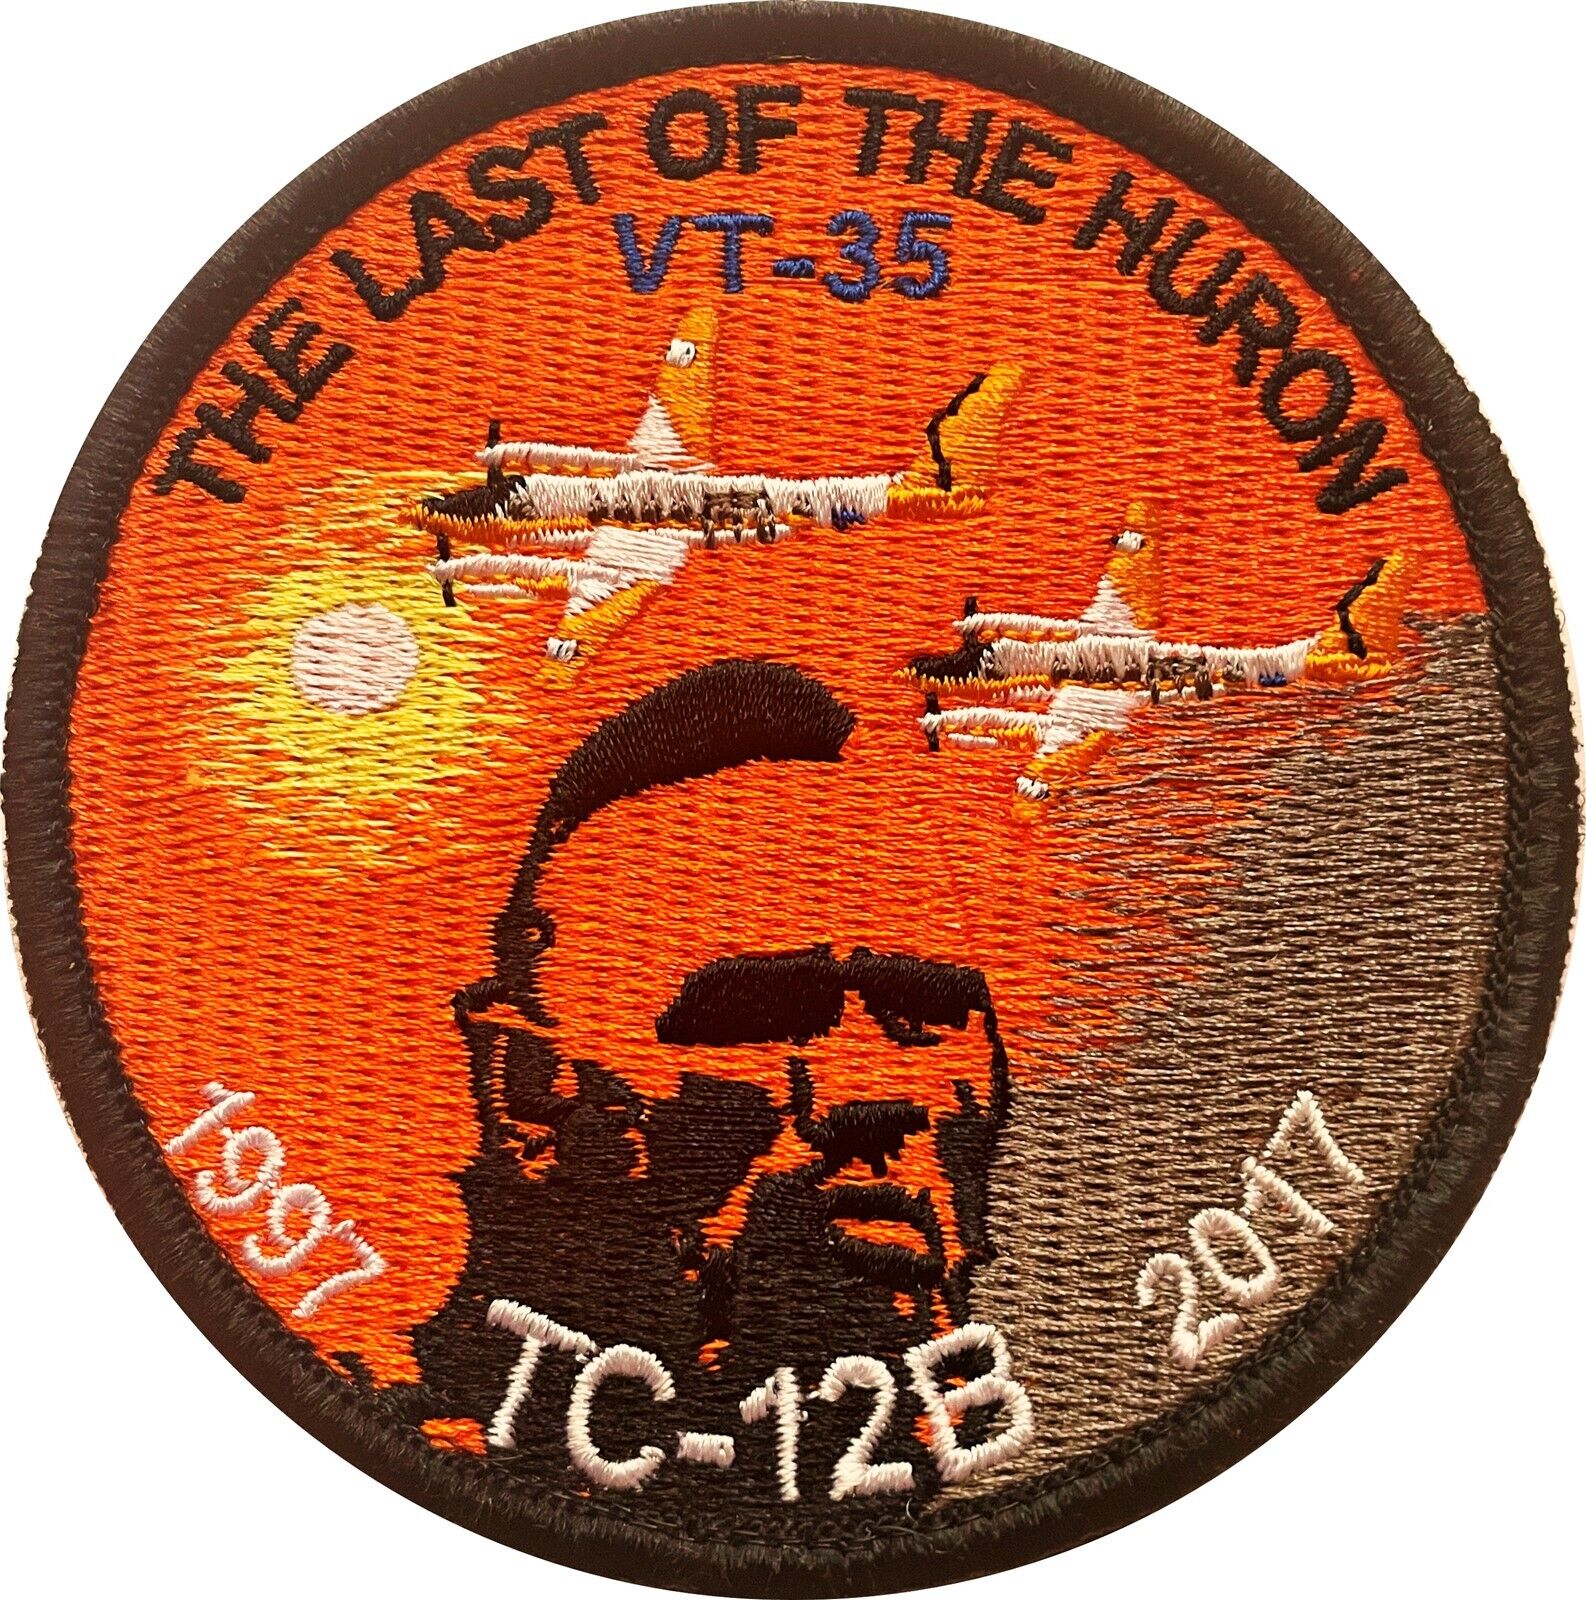 VT-35 Stingrays TC-12B Last of the Huron 1997-2017 US Navy jacket patch